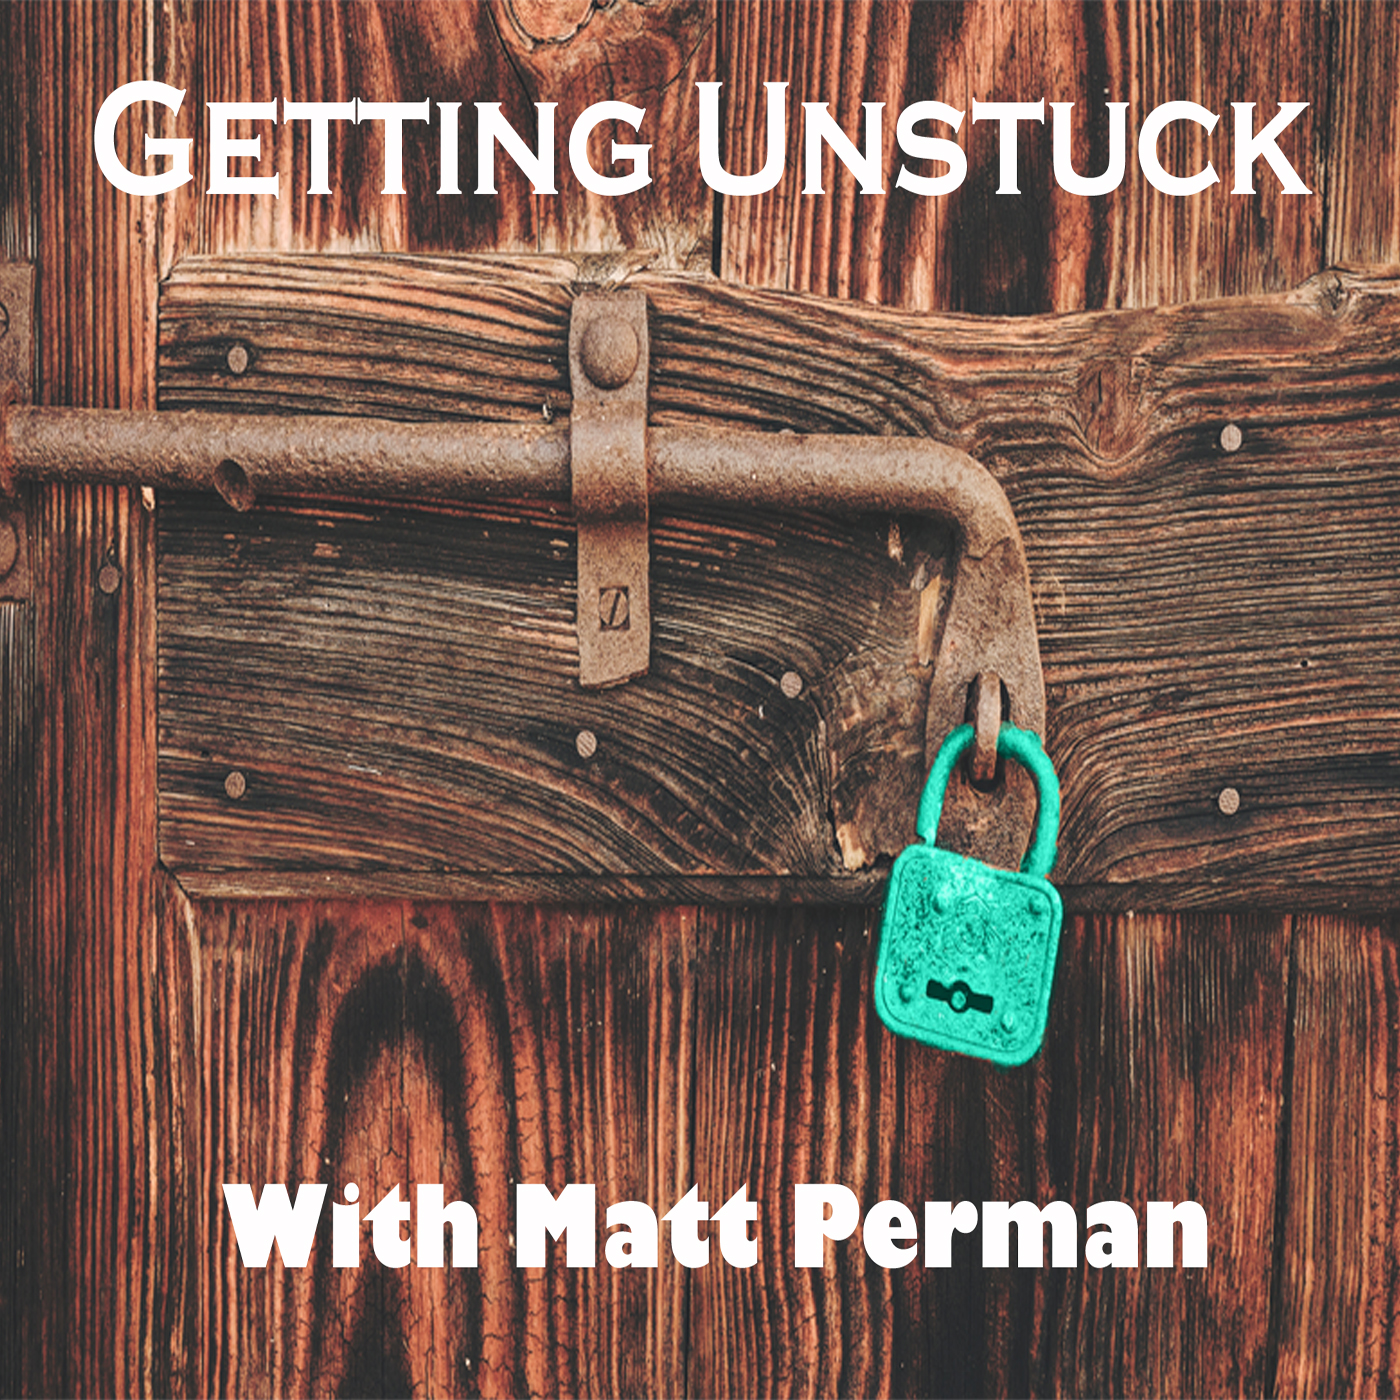 Getting Unstuck With Matt Perman